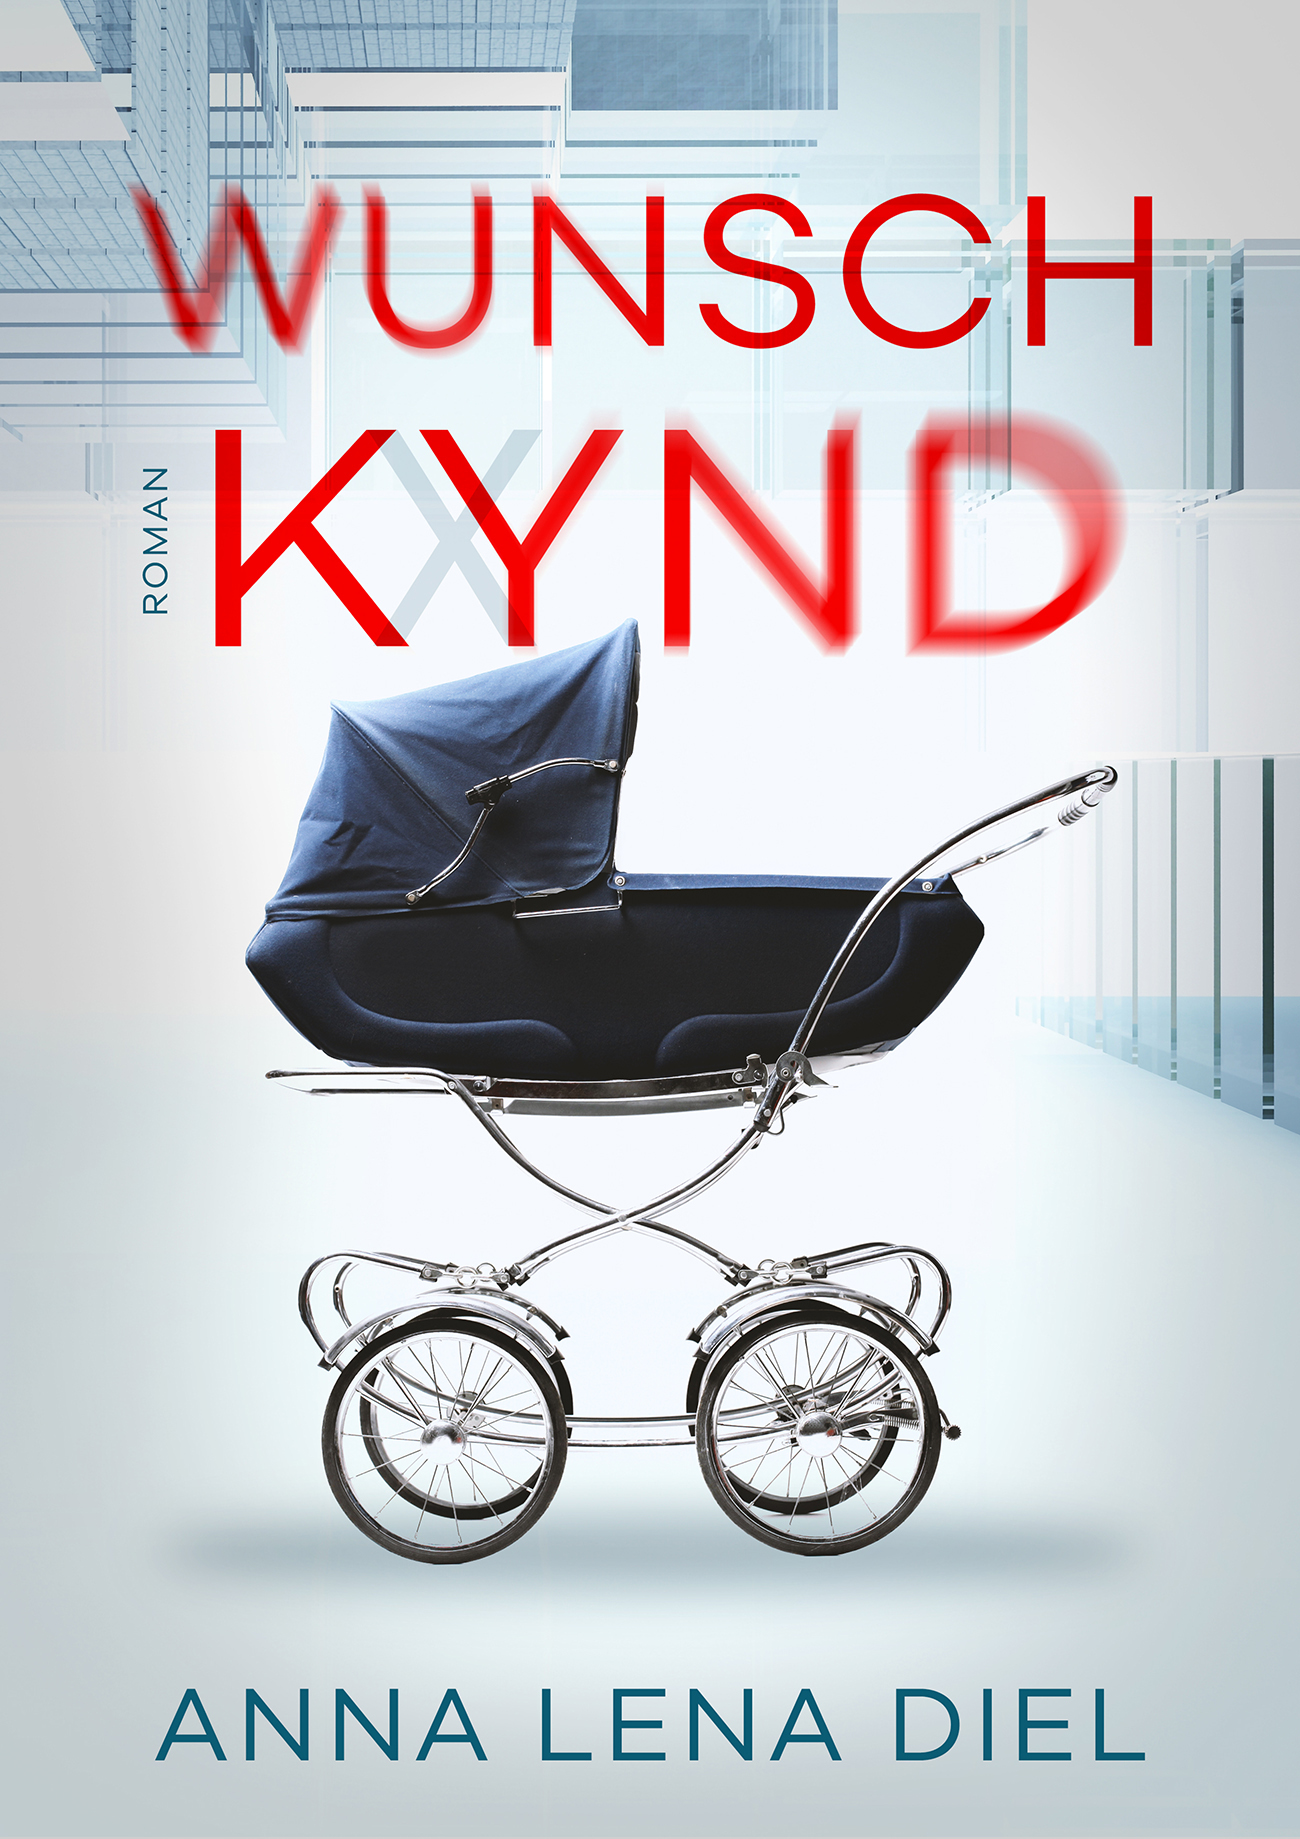 Wunschkynd Cover-0e315da7